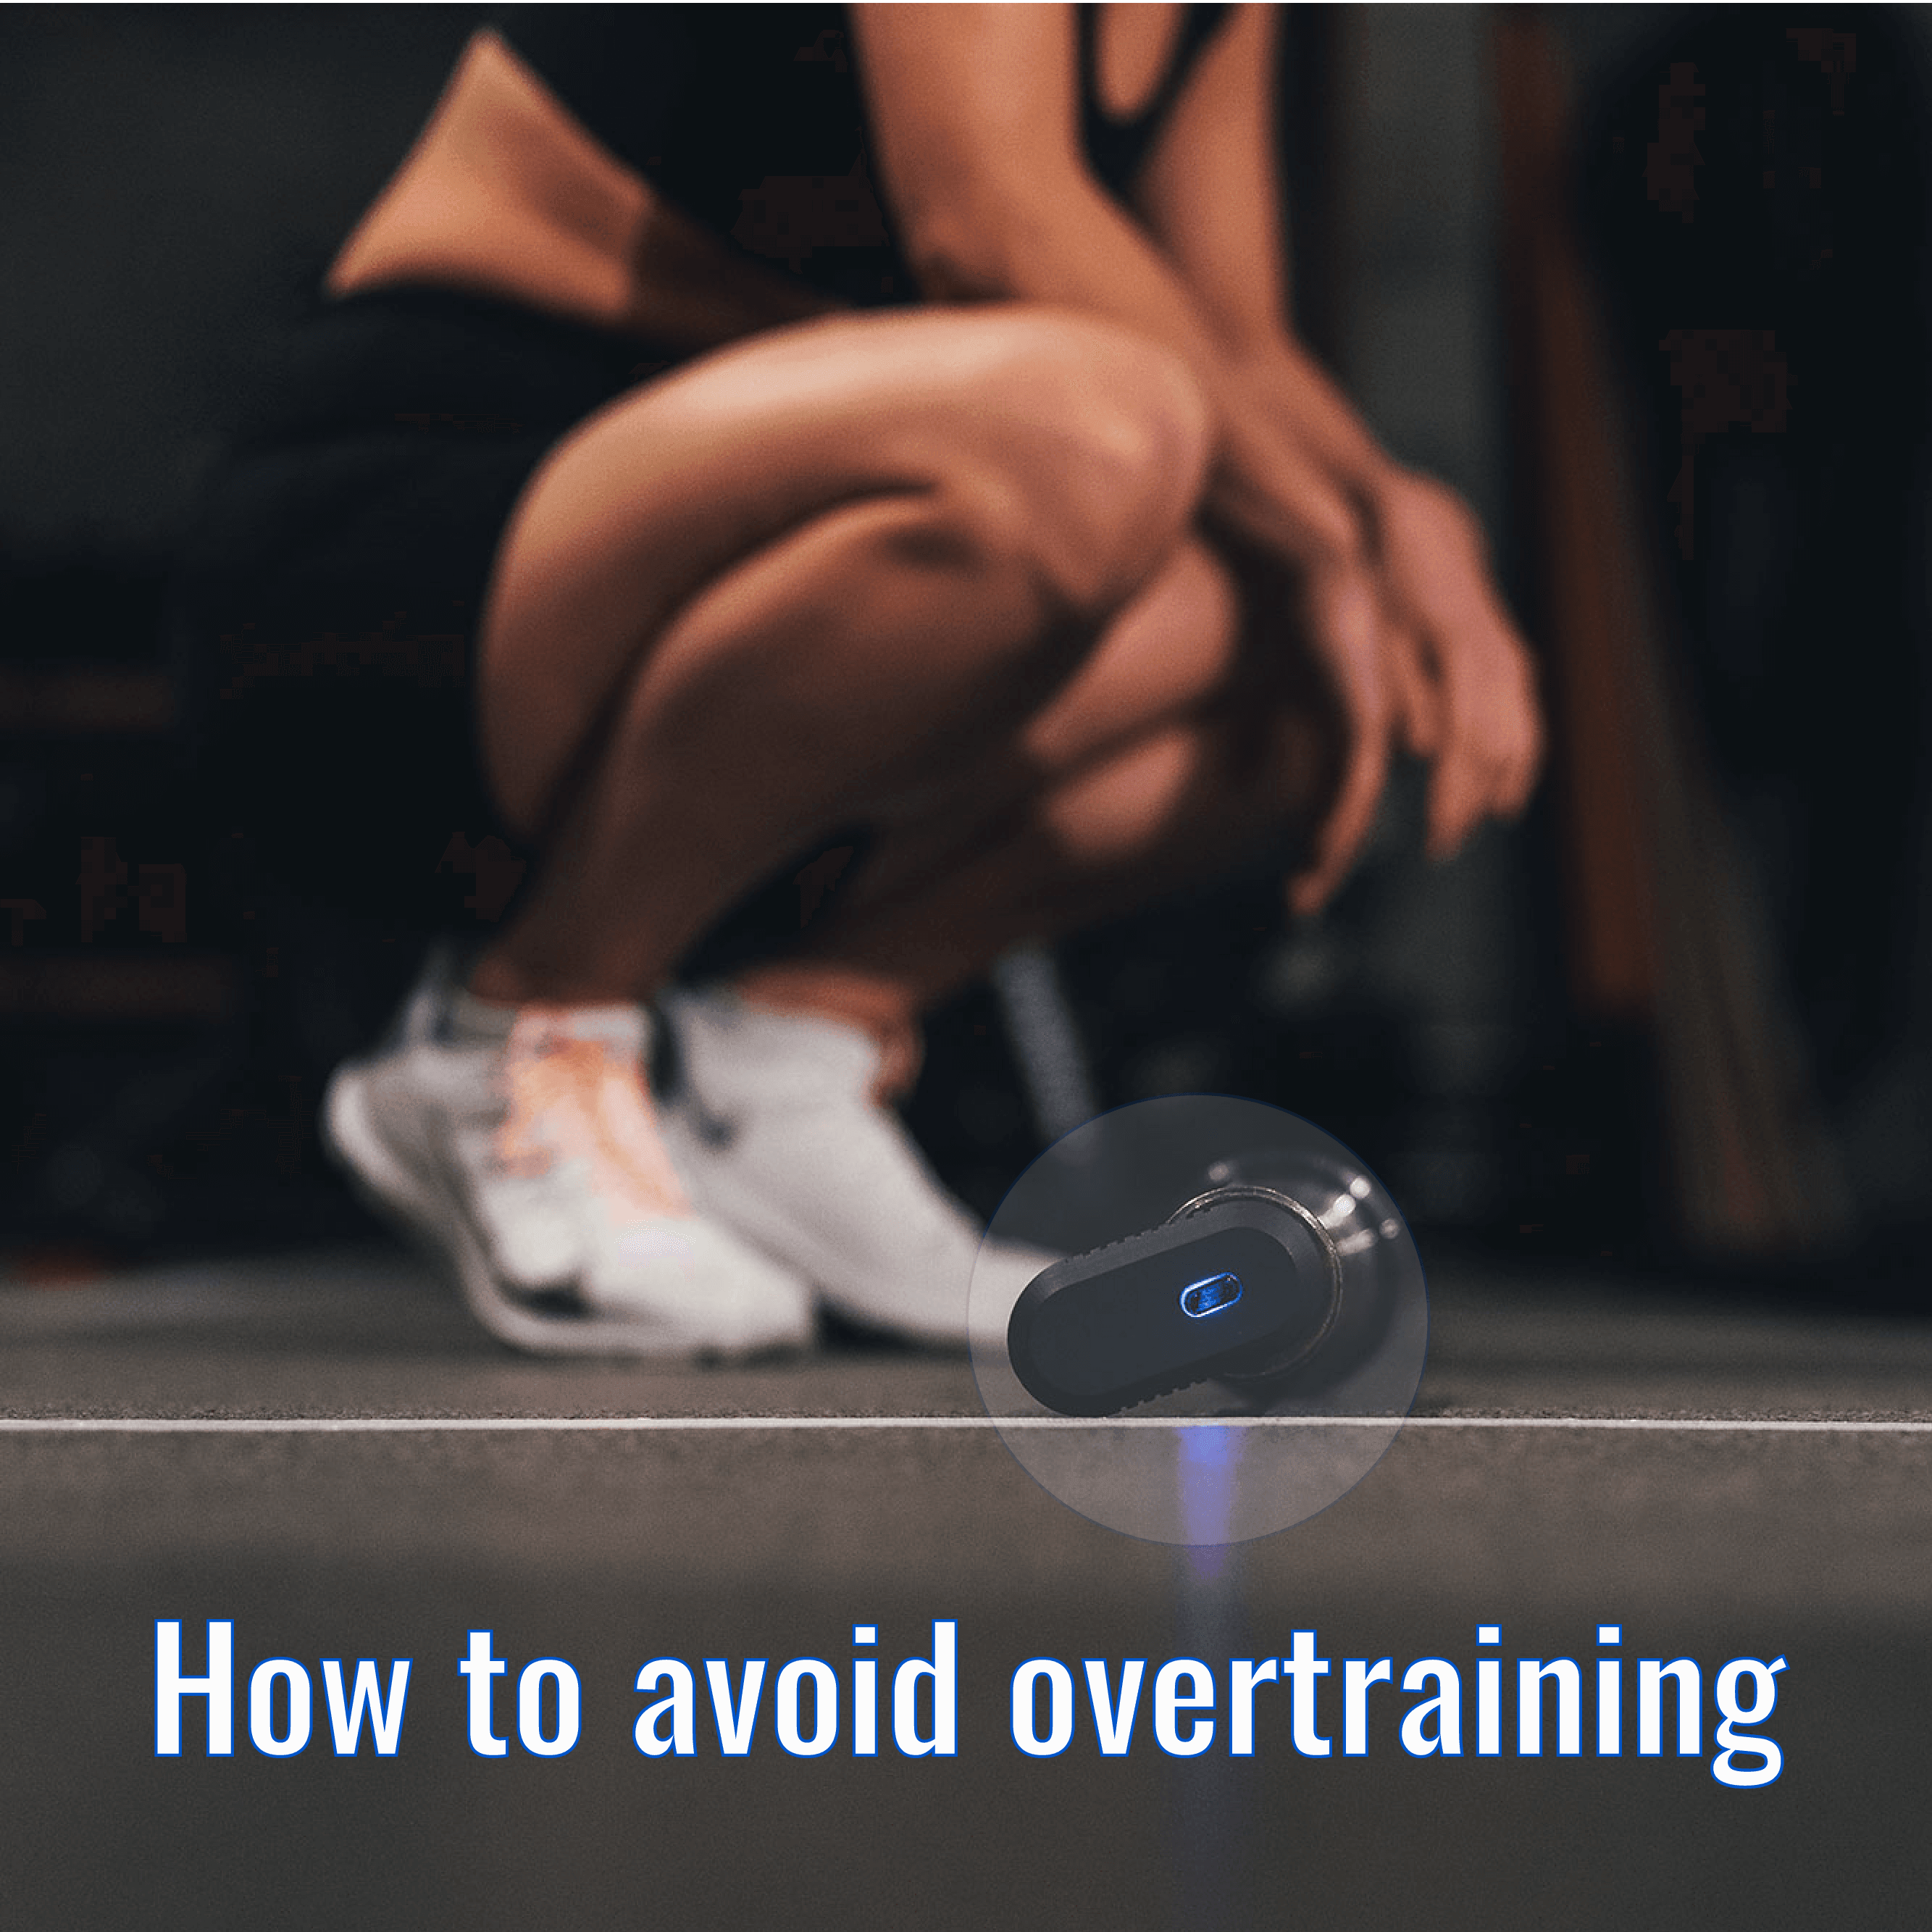 Avoid overtraining with velocity cutoffs